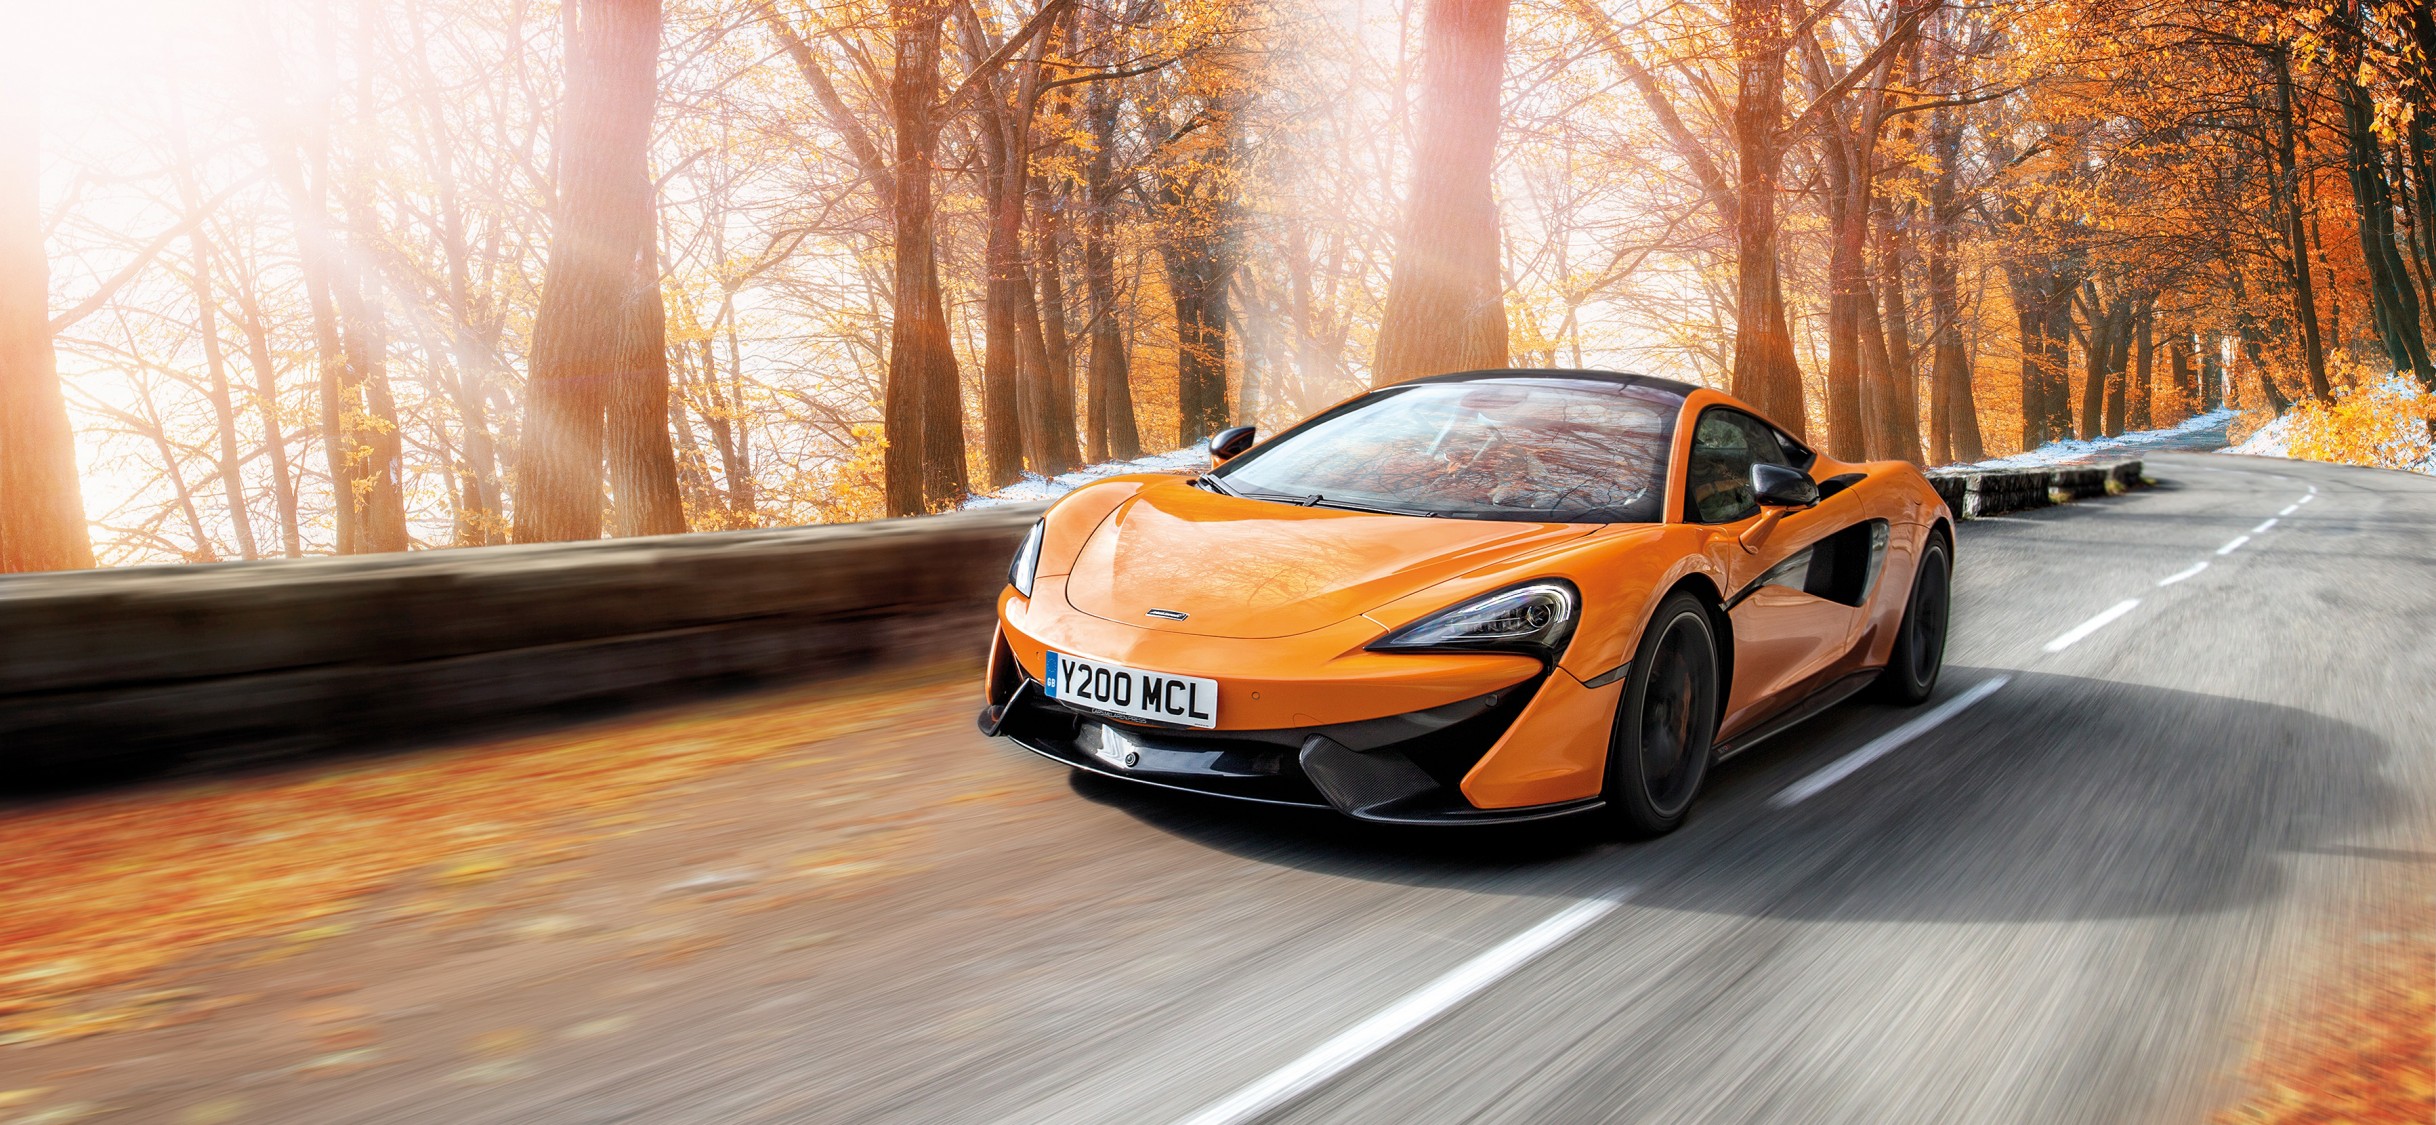 Download McLaren Cars Full HD Wallpaper for Desktop and Mobiles